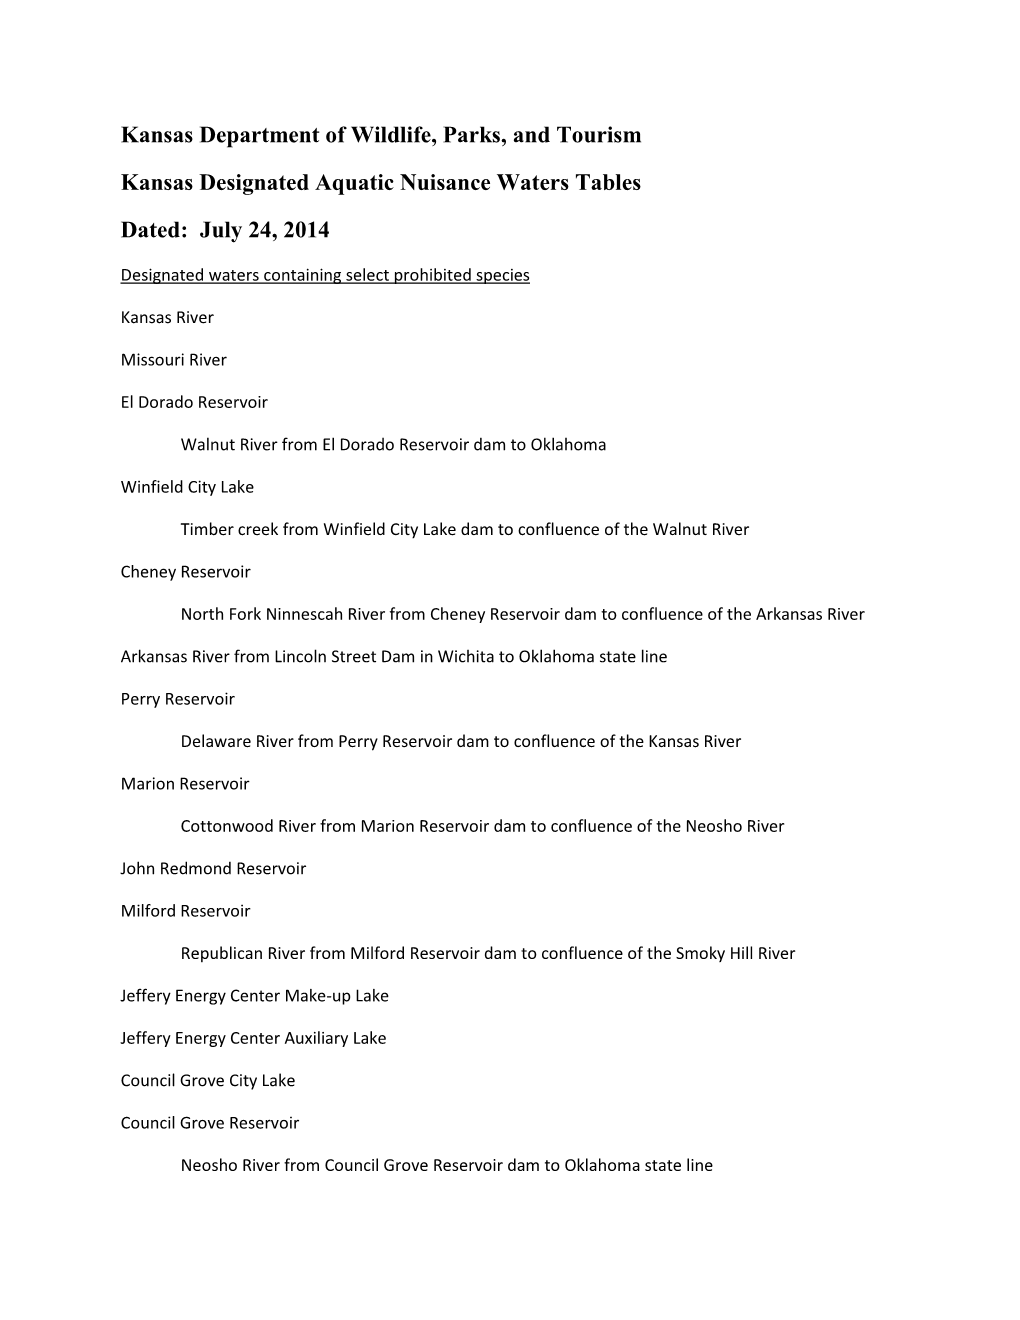 KDWPT Kansas Designated Aquatic Nuisance Waters Table